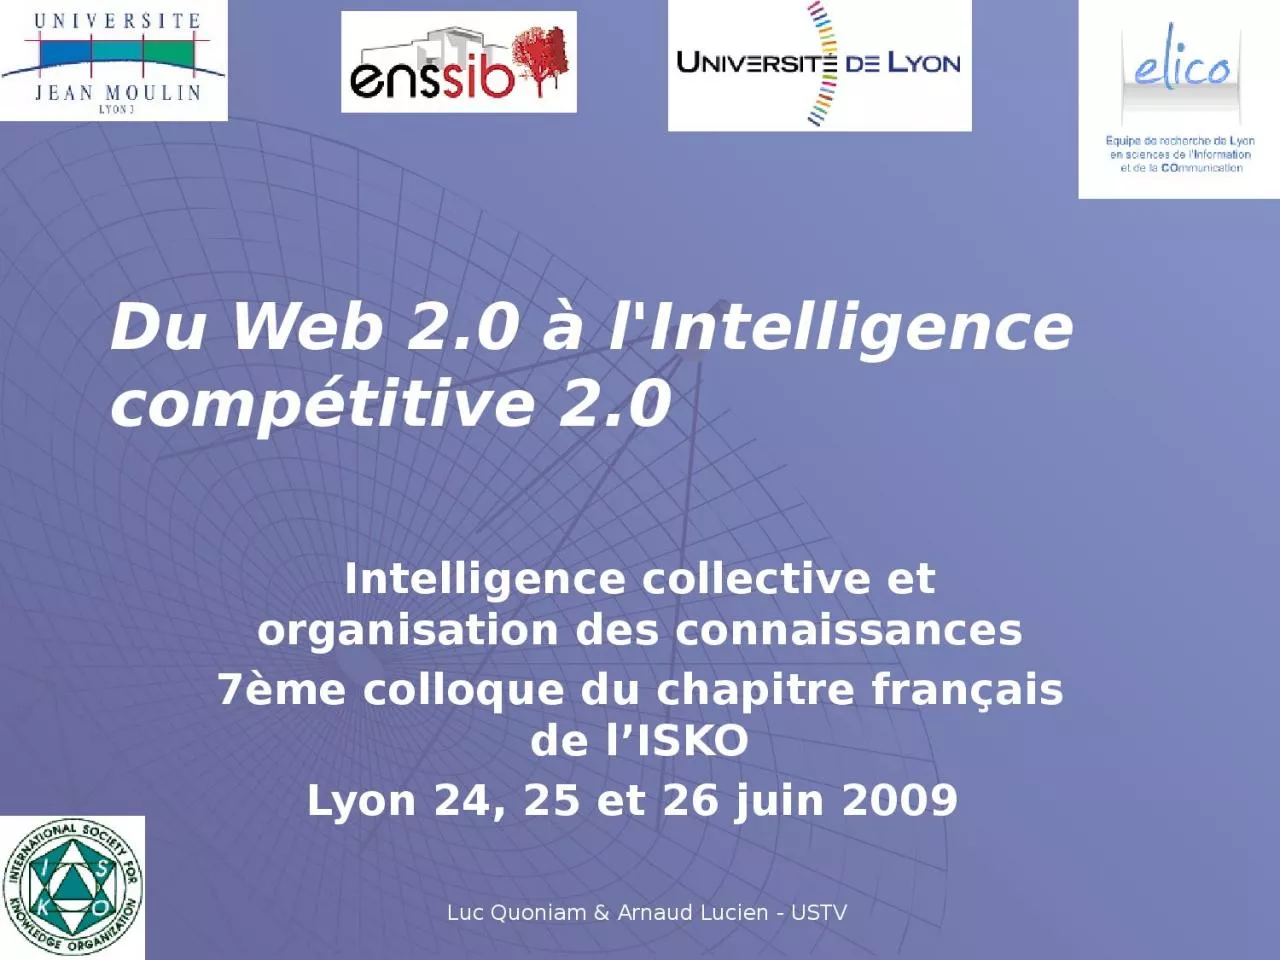 Du Web 2.0 à l'Intelligence compétitive 2.0